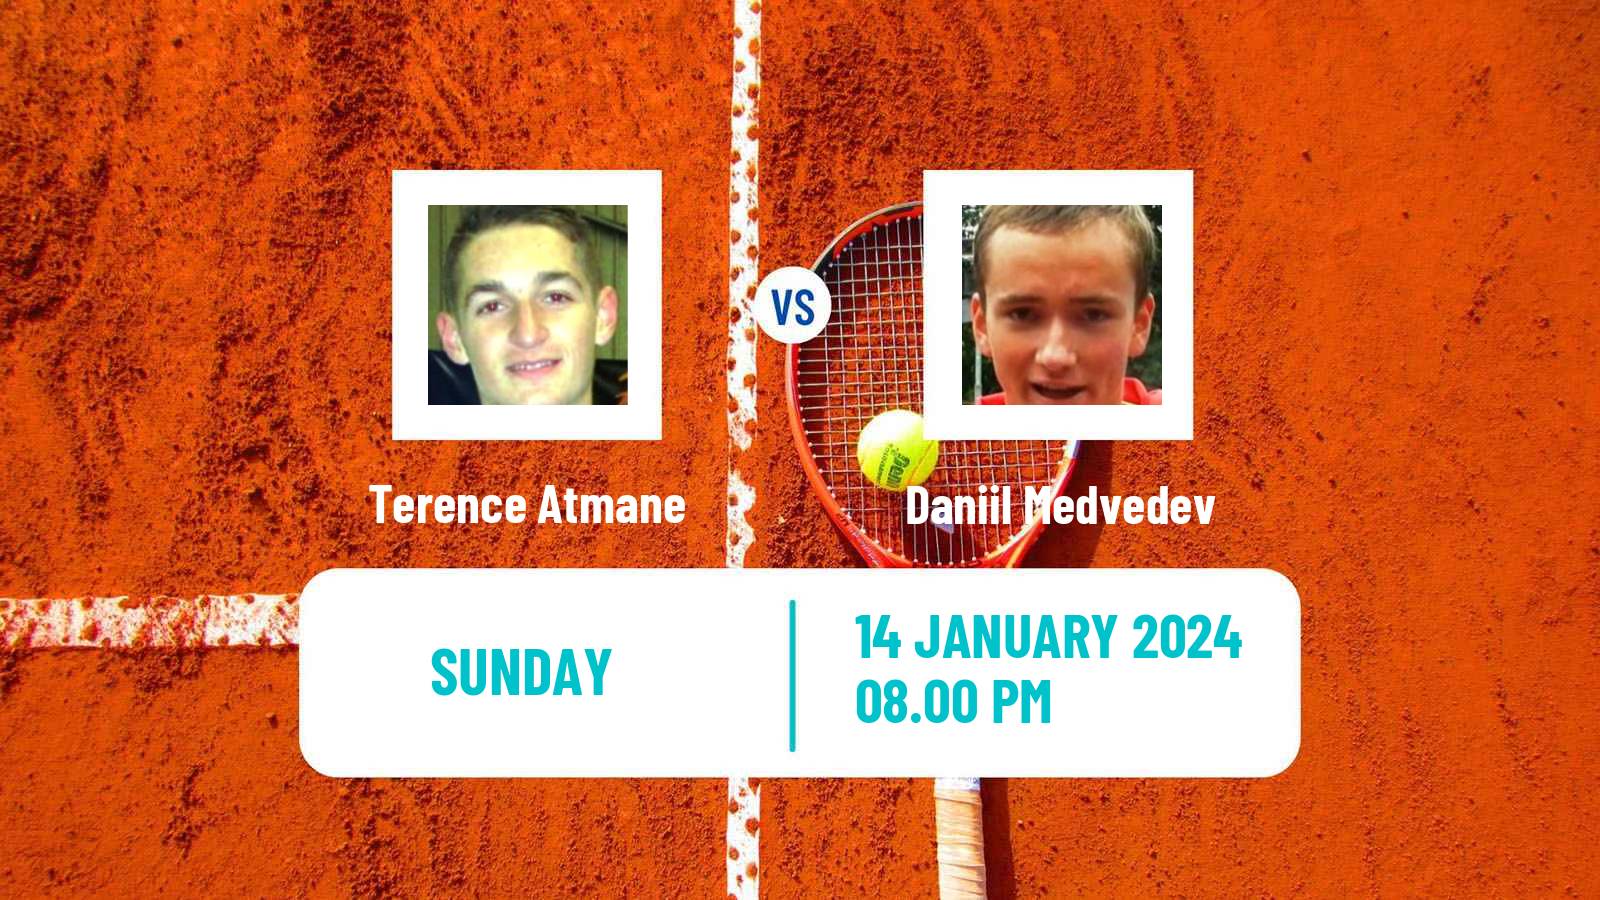 Tennis ATP Australian Open Terence Atmane - Daniil Medvedev